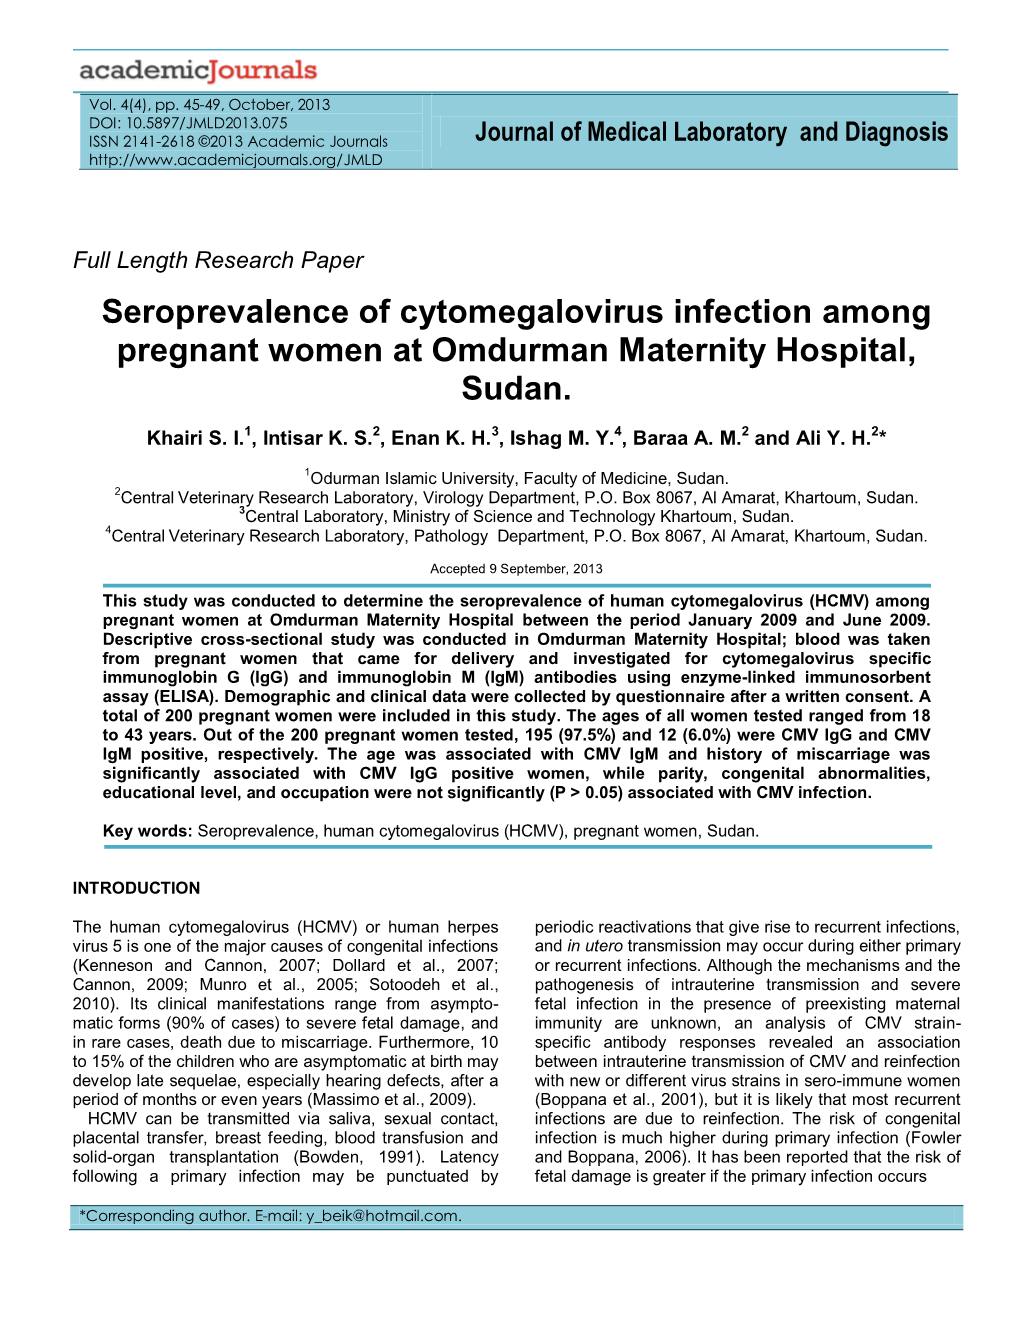 Seroprevalence of Cytomegalovirus Infection Among Pregnant Women at Omdurman Maternity Hospital, Sudan